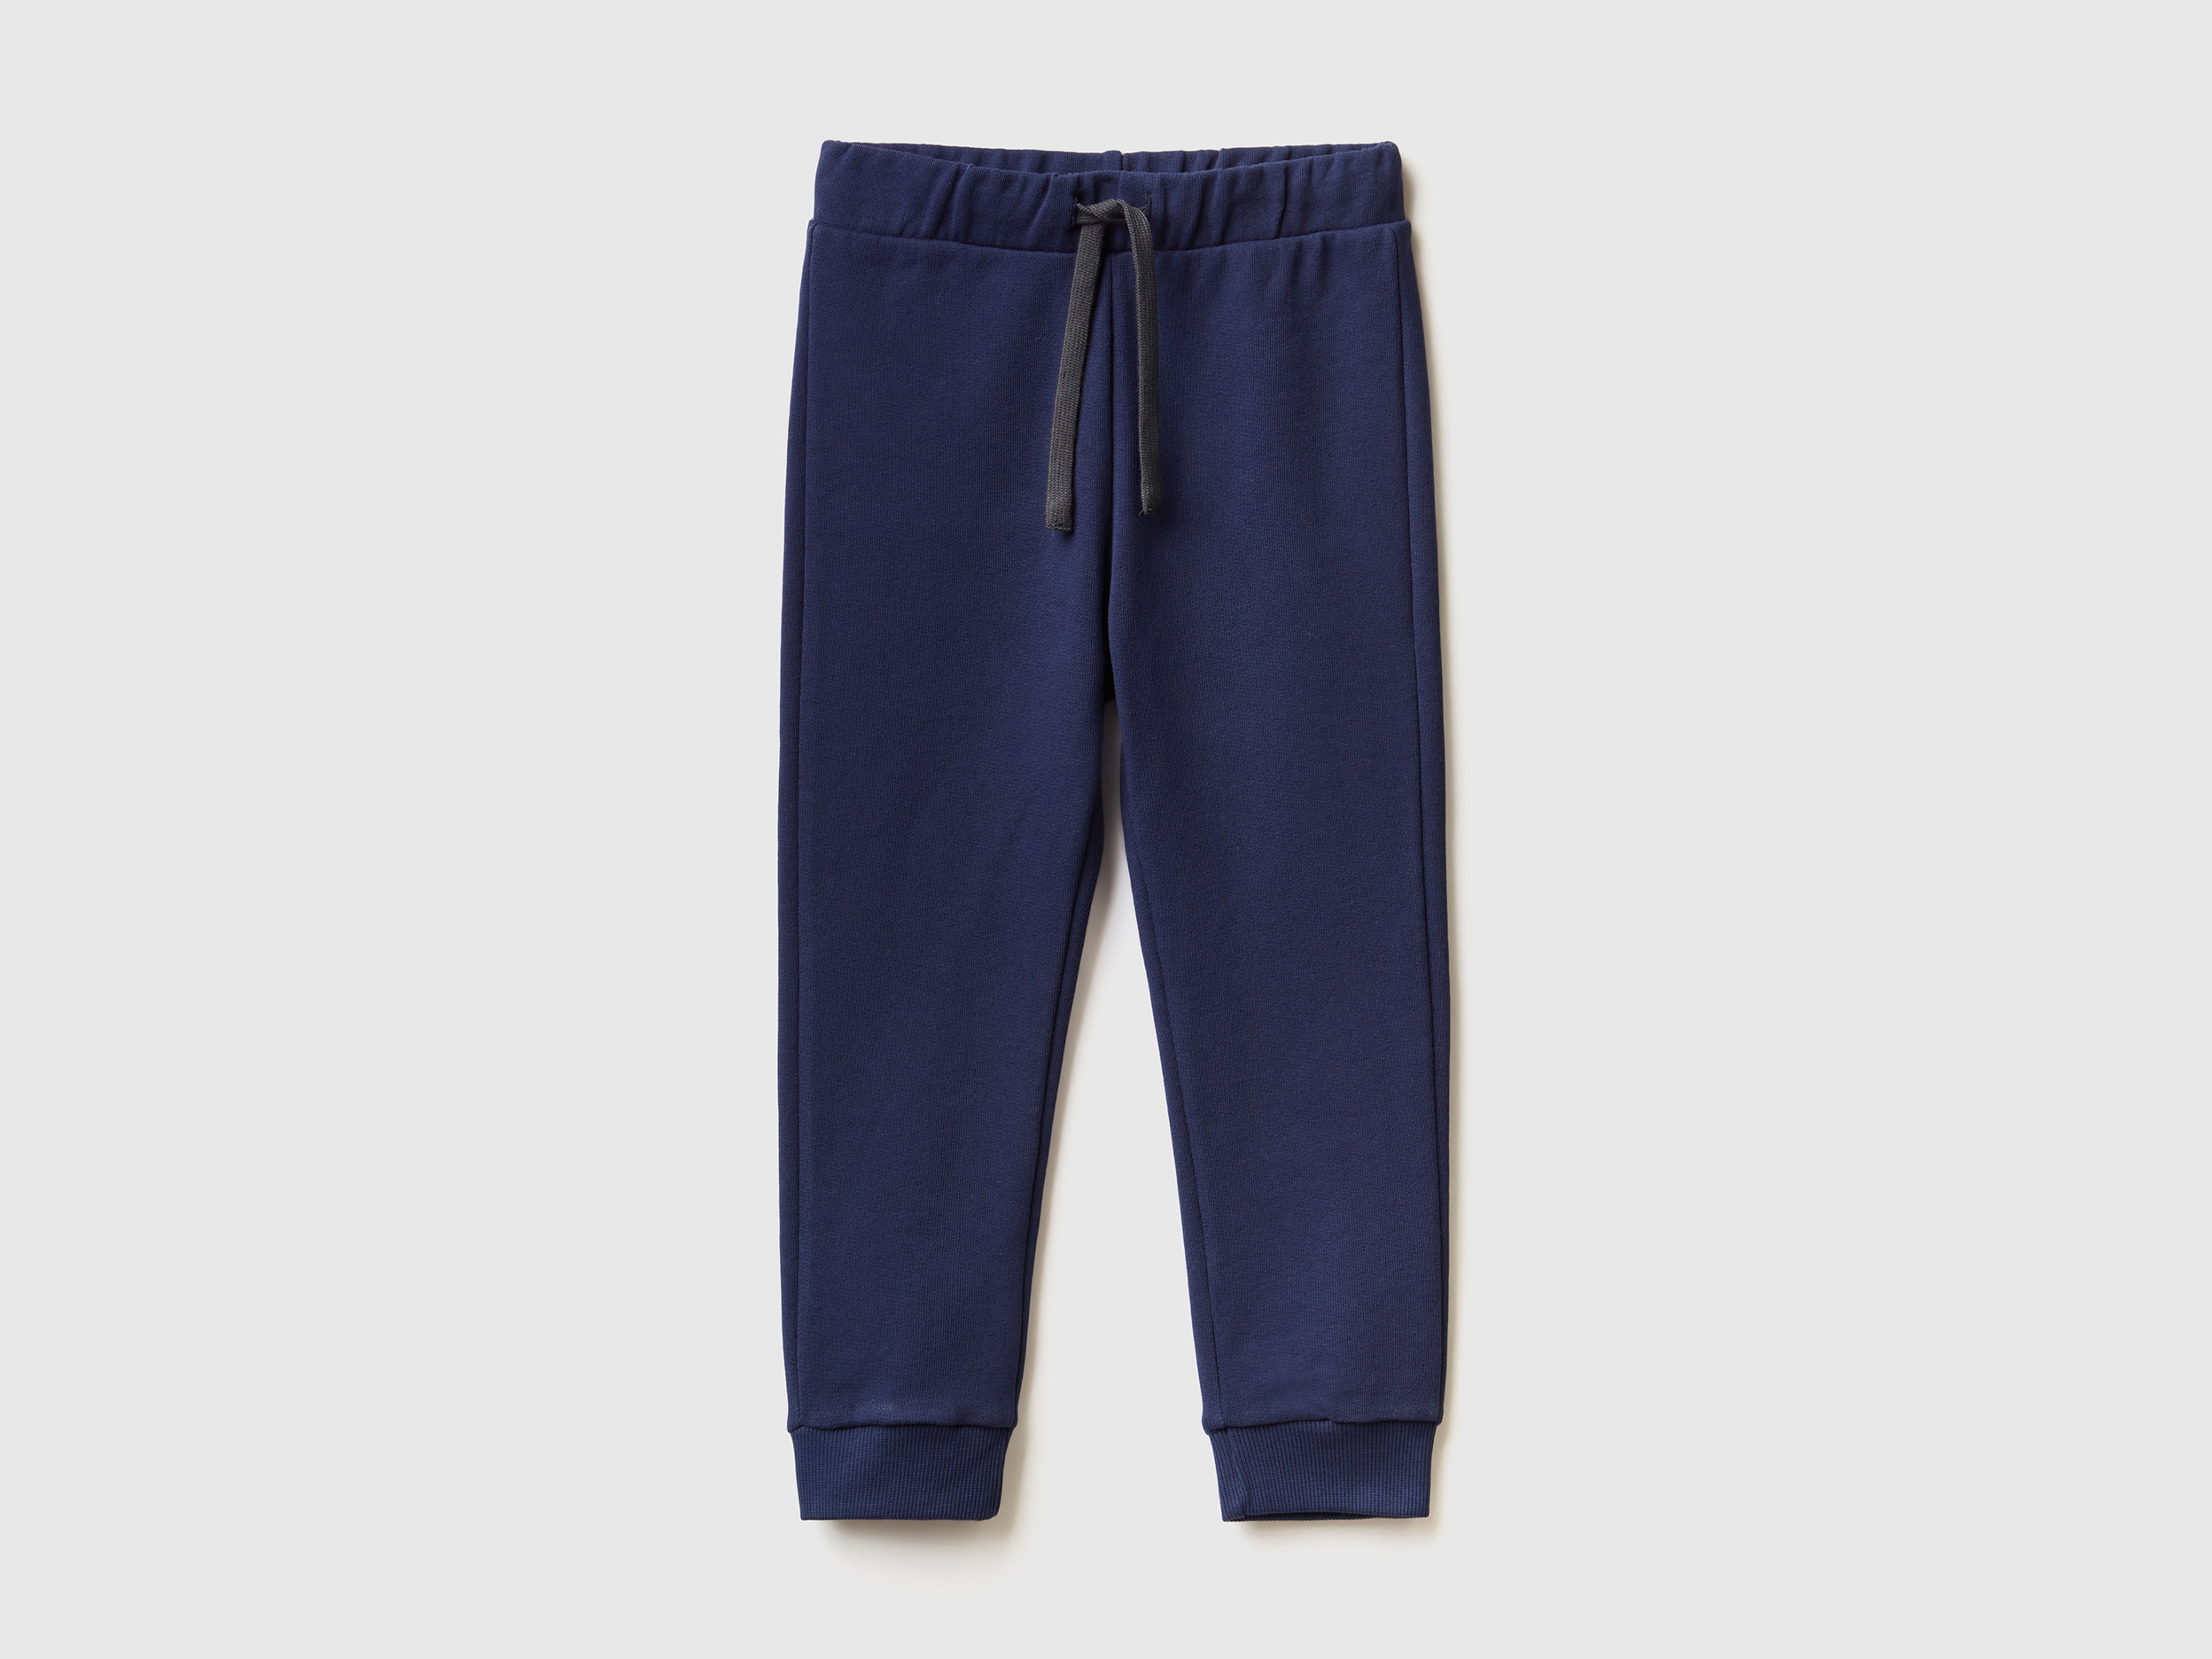 Benetton, Sweatpants With Pocket, size 4-5, Dark Blue, Kids